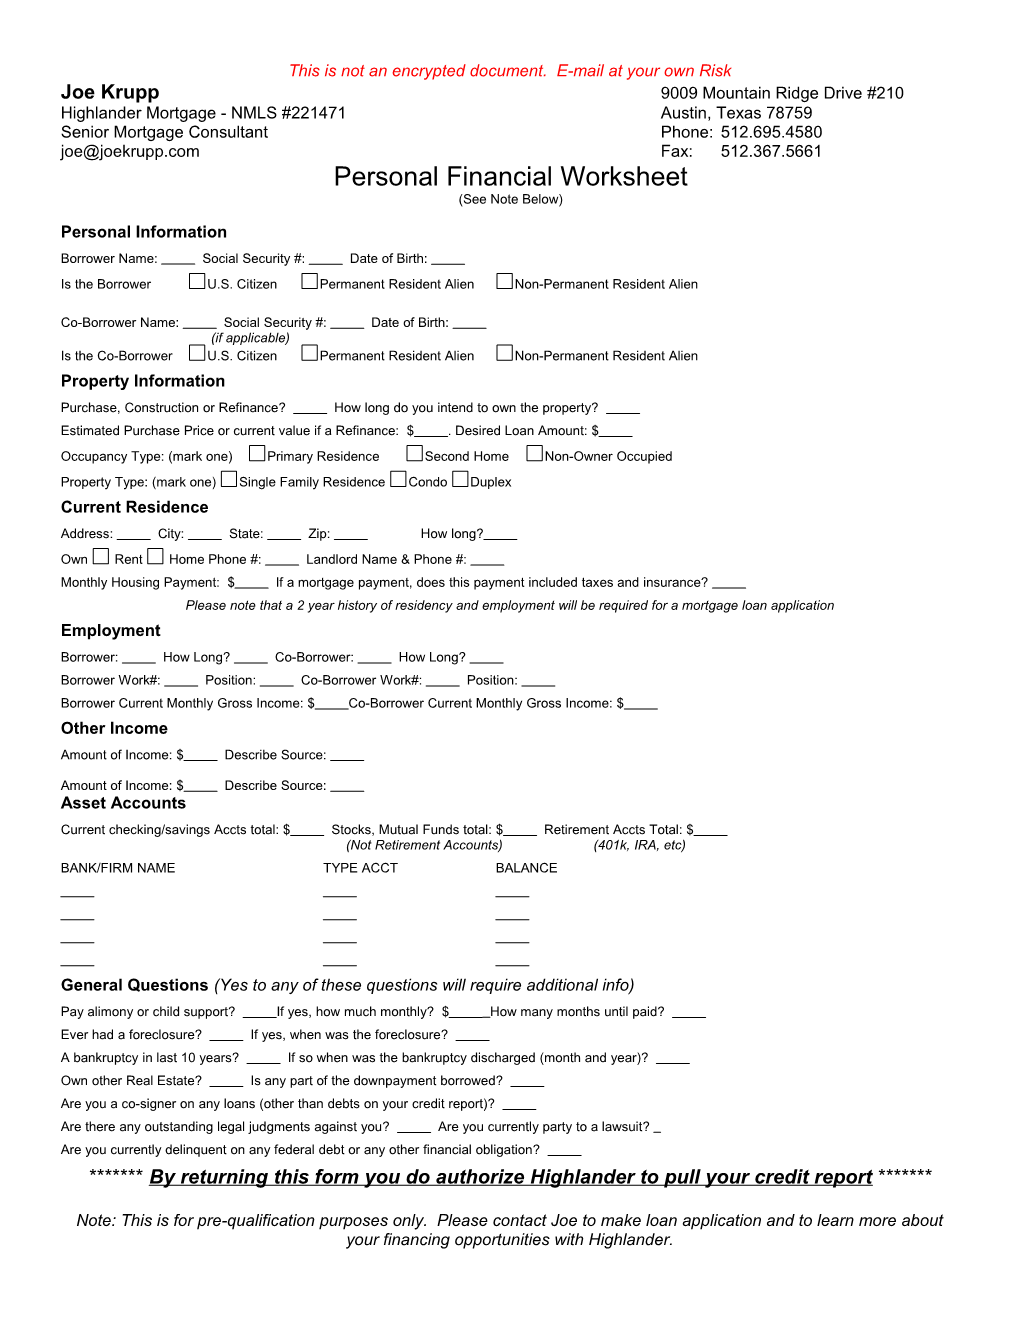 Personal Financial Worksheet